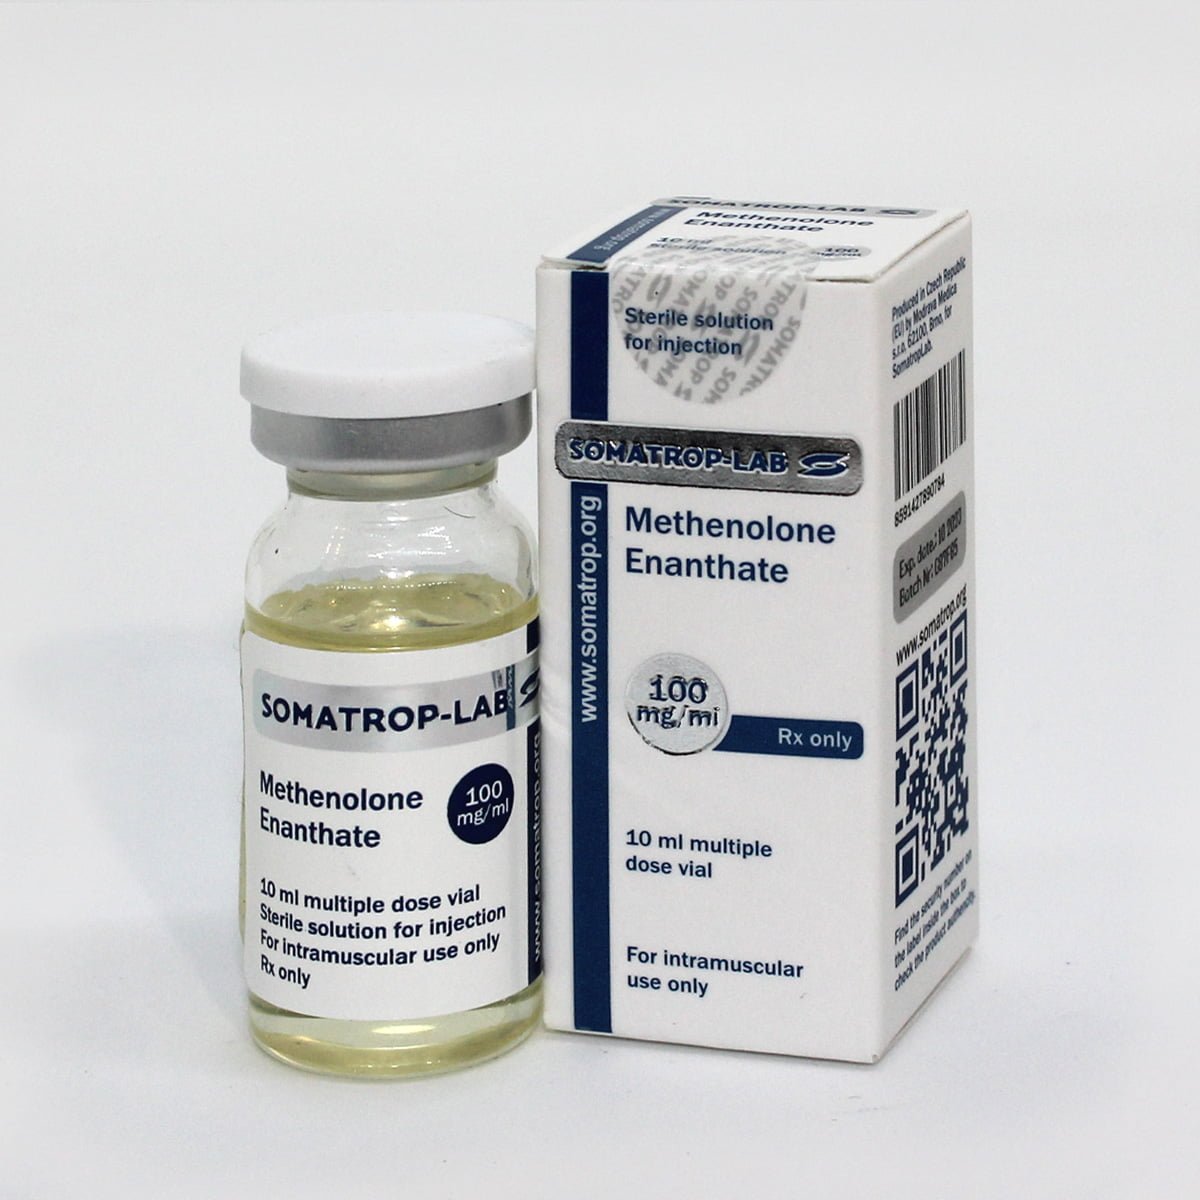 Somatrop-Lab Methenolone Enanthate 100